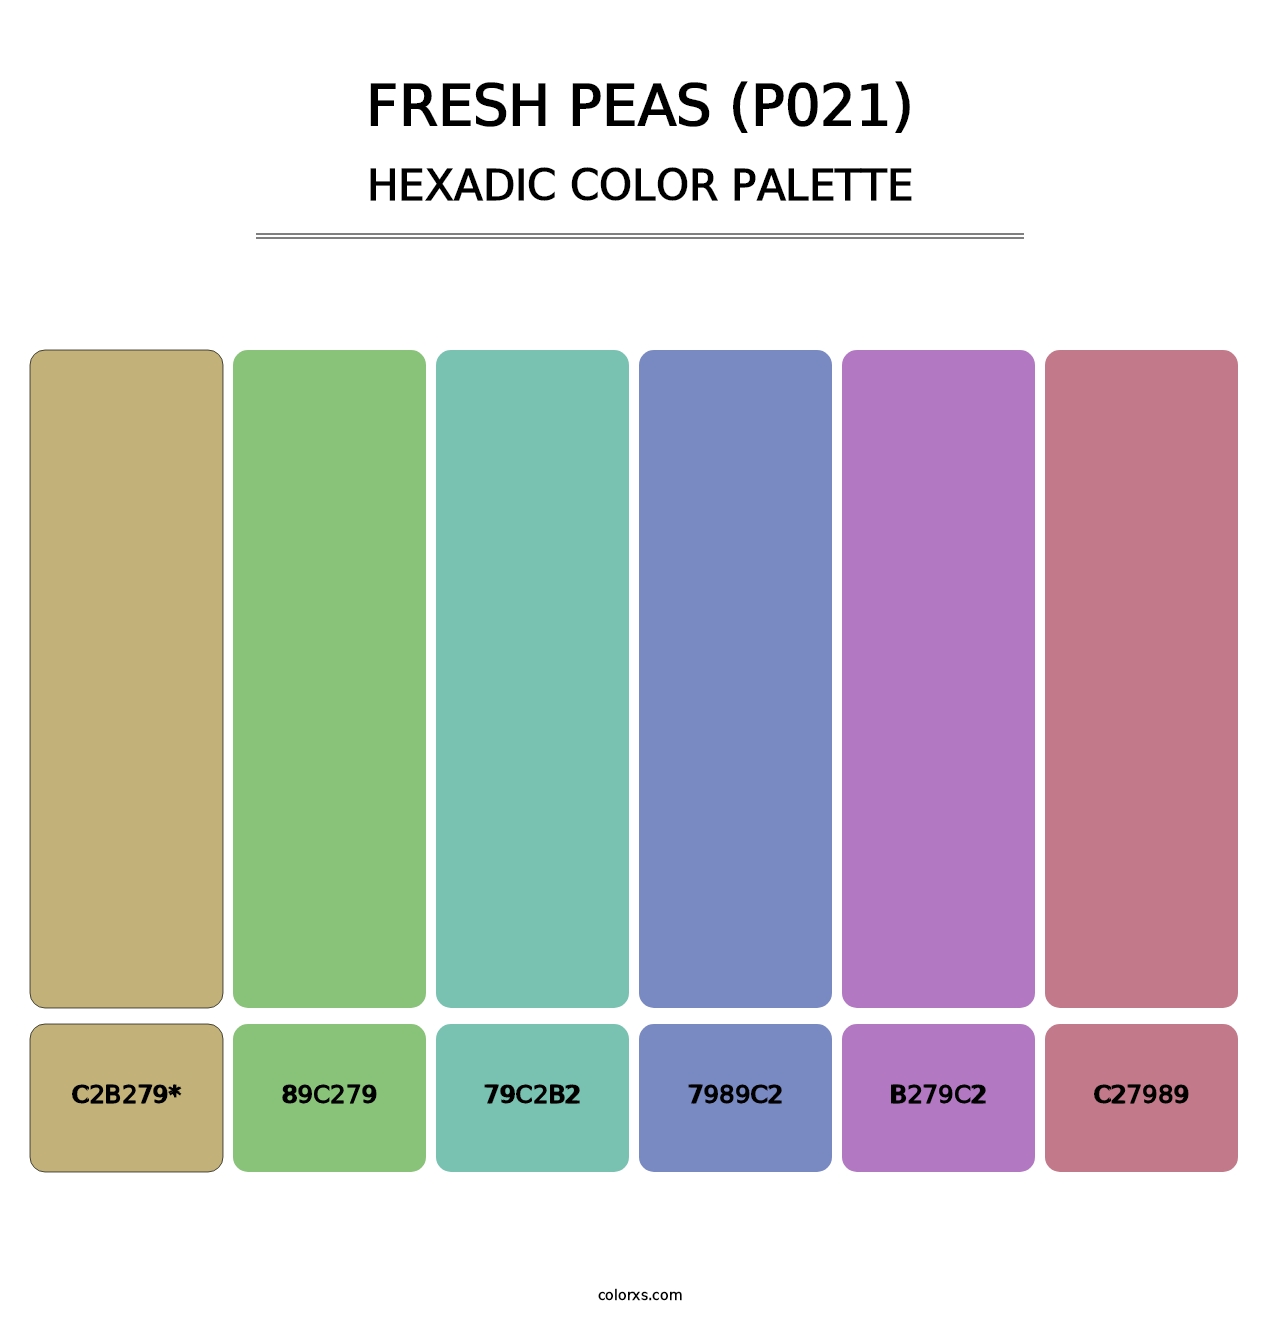 Fresh Peas (P021) - Hexadic Color Palette